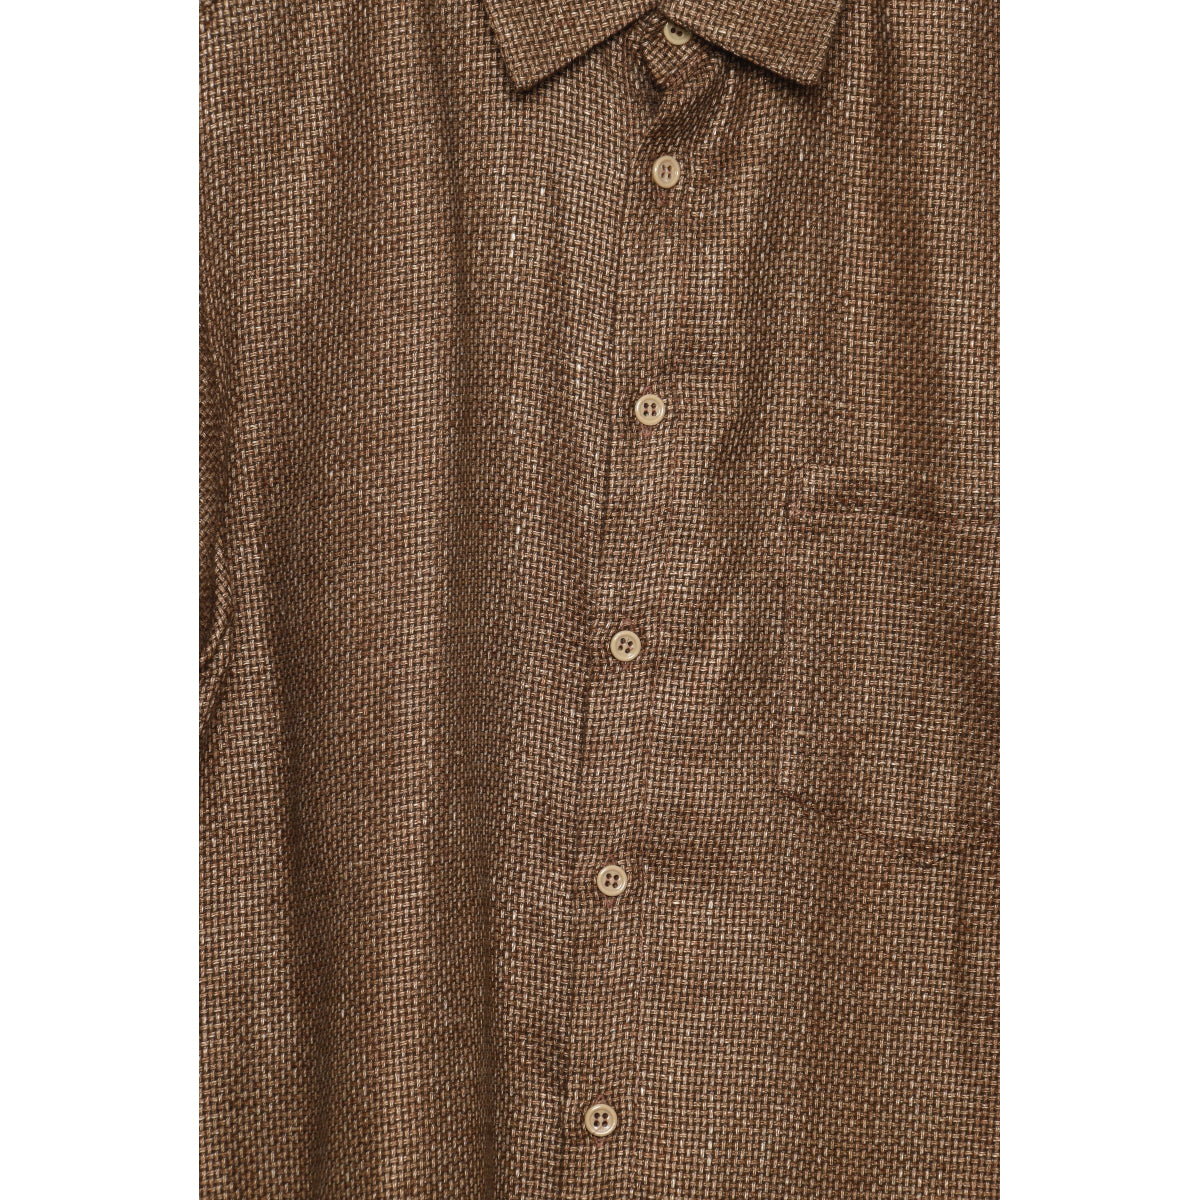 Frank Leder Bronze Weave Wool Shirt brown